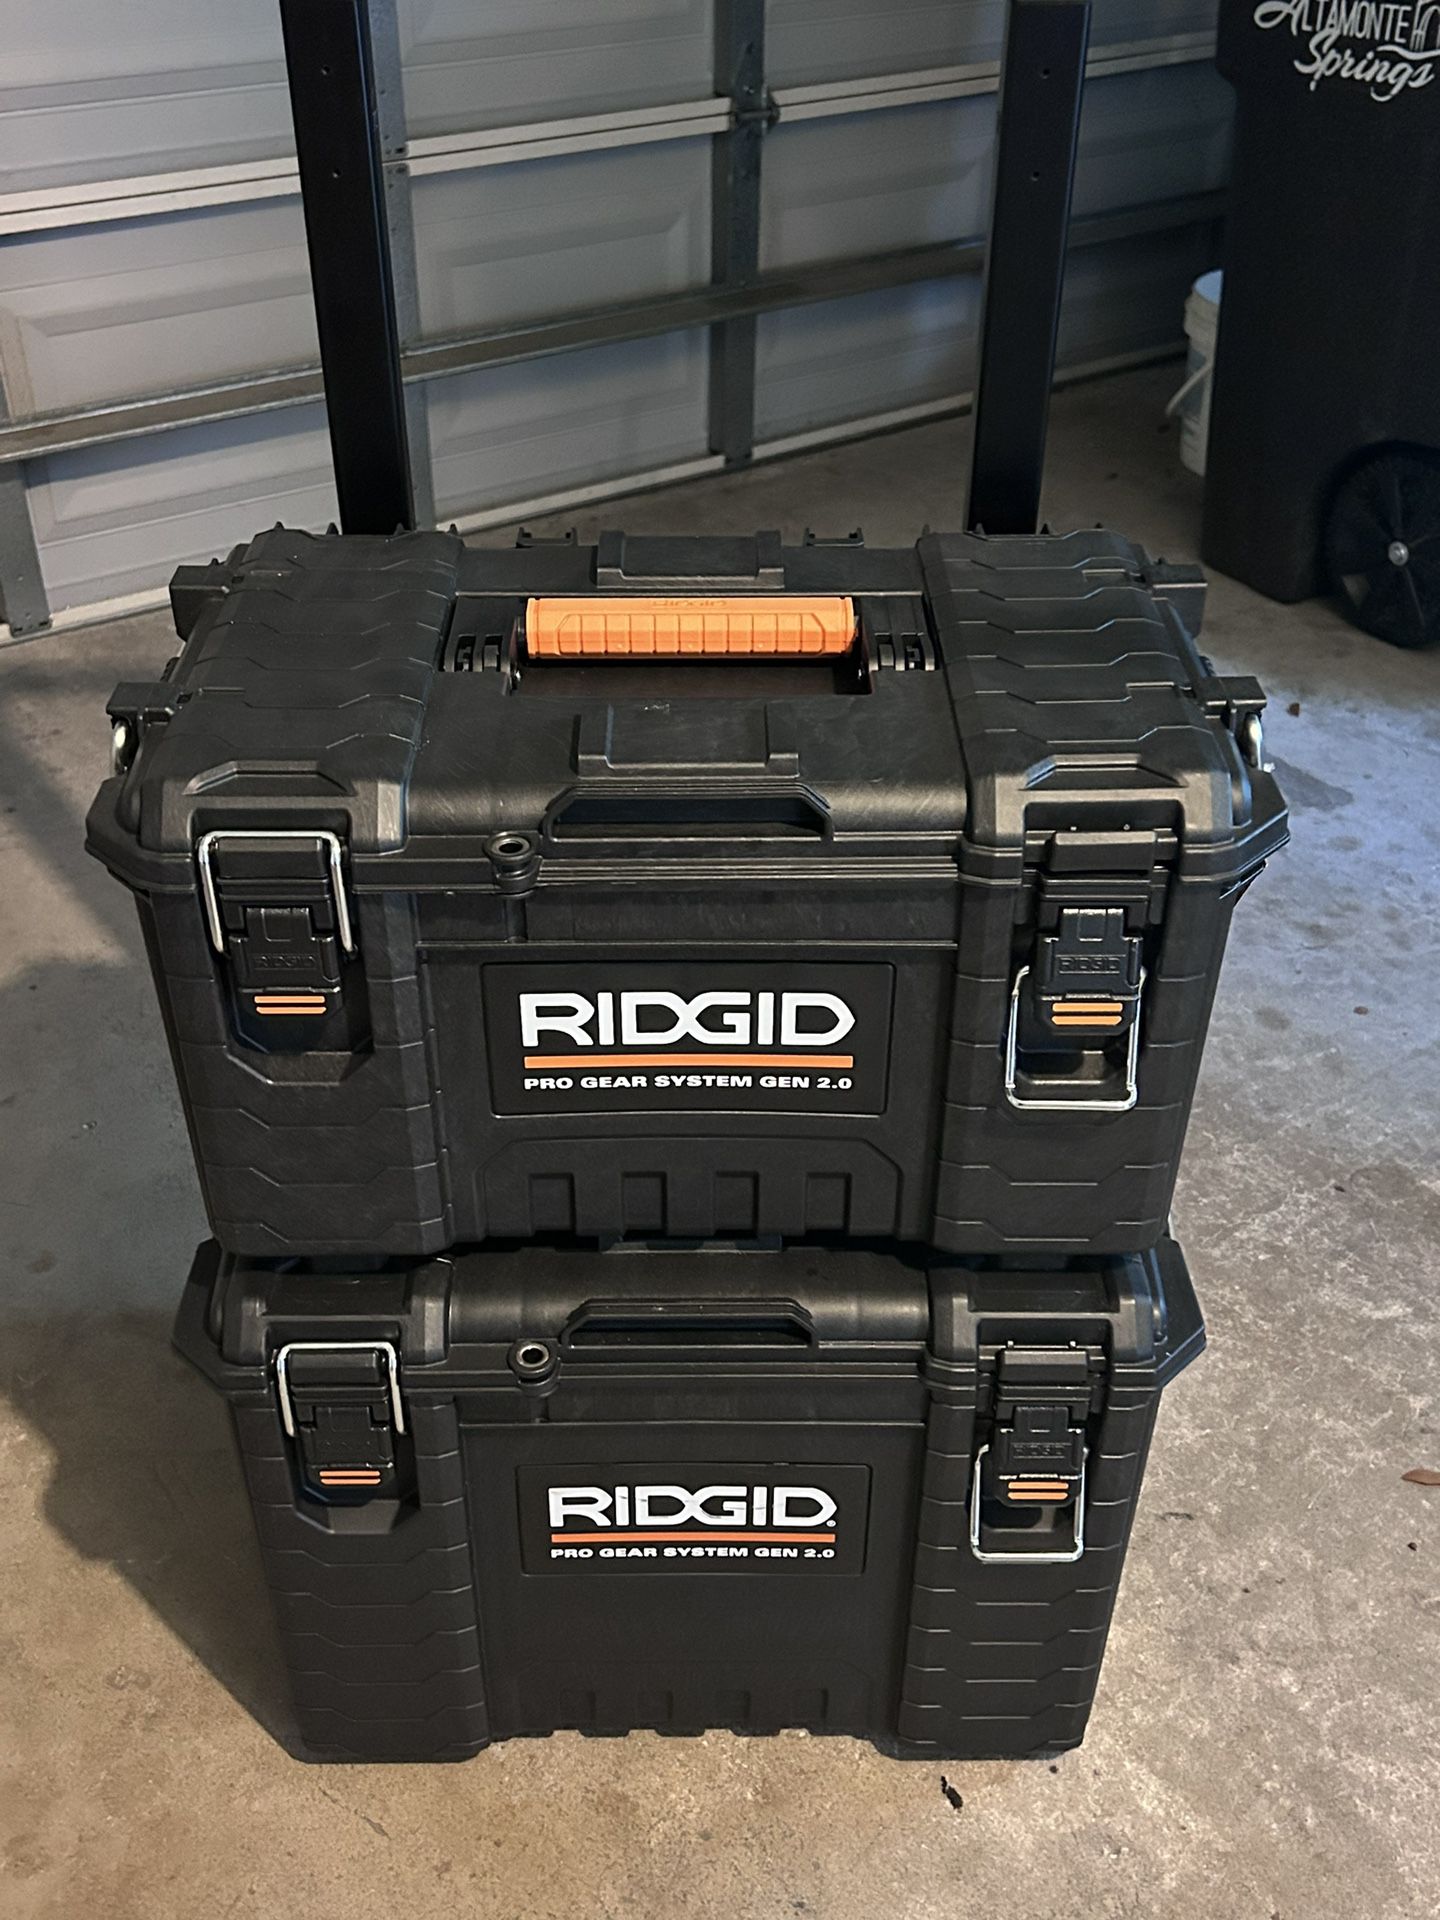 (Brand new) Rigid 2.0 Pro-Gear All Terrain Rolling Tool Cart (2 Stack)